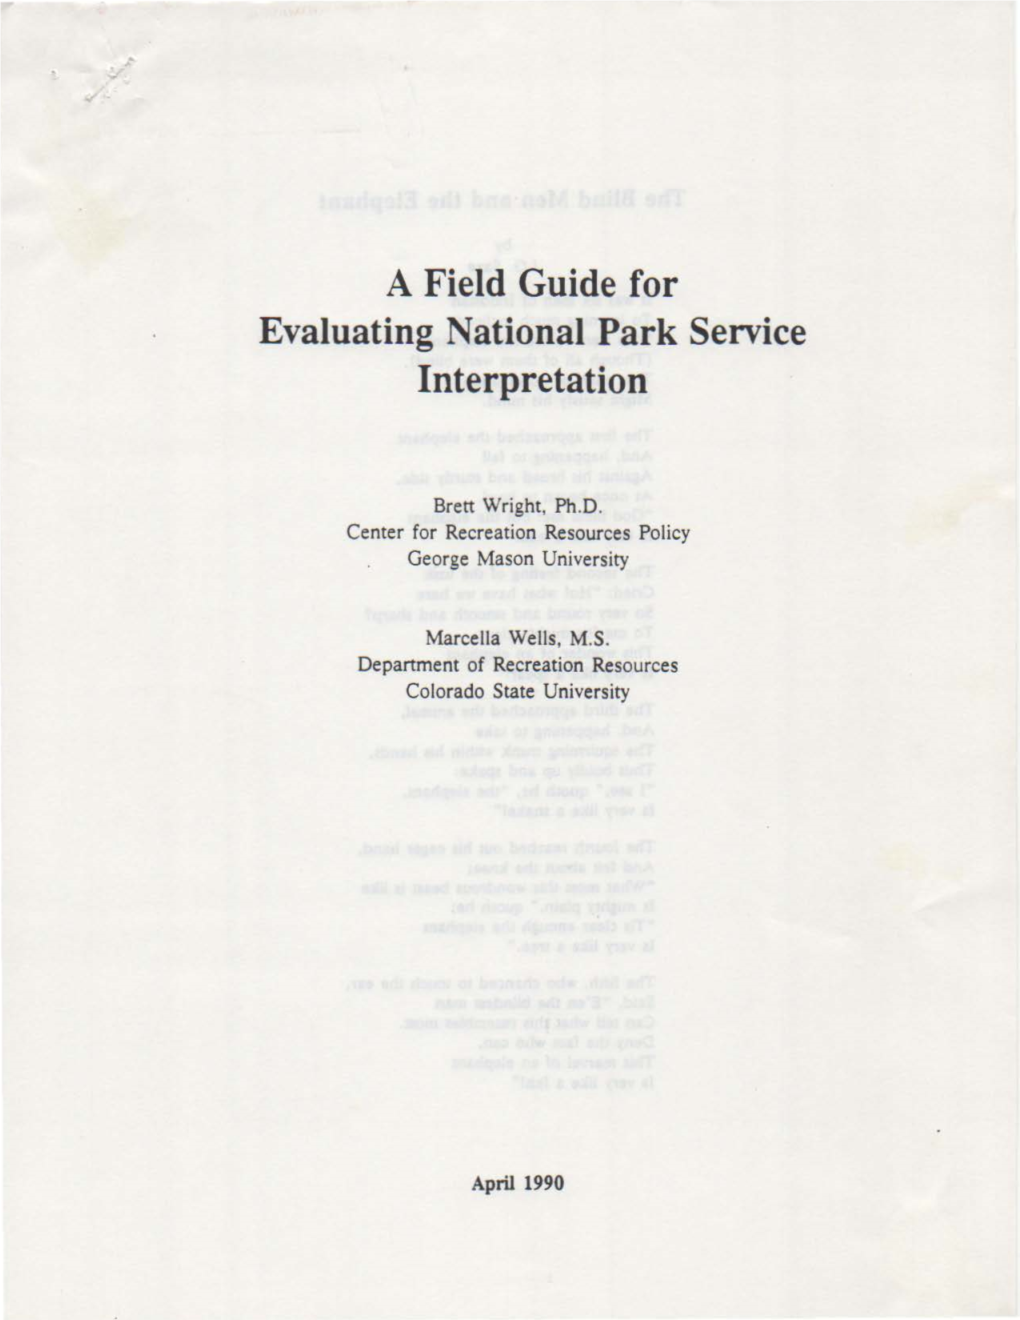 A Field Guide for Evaluating National Park Service Interpretation